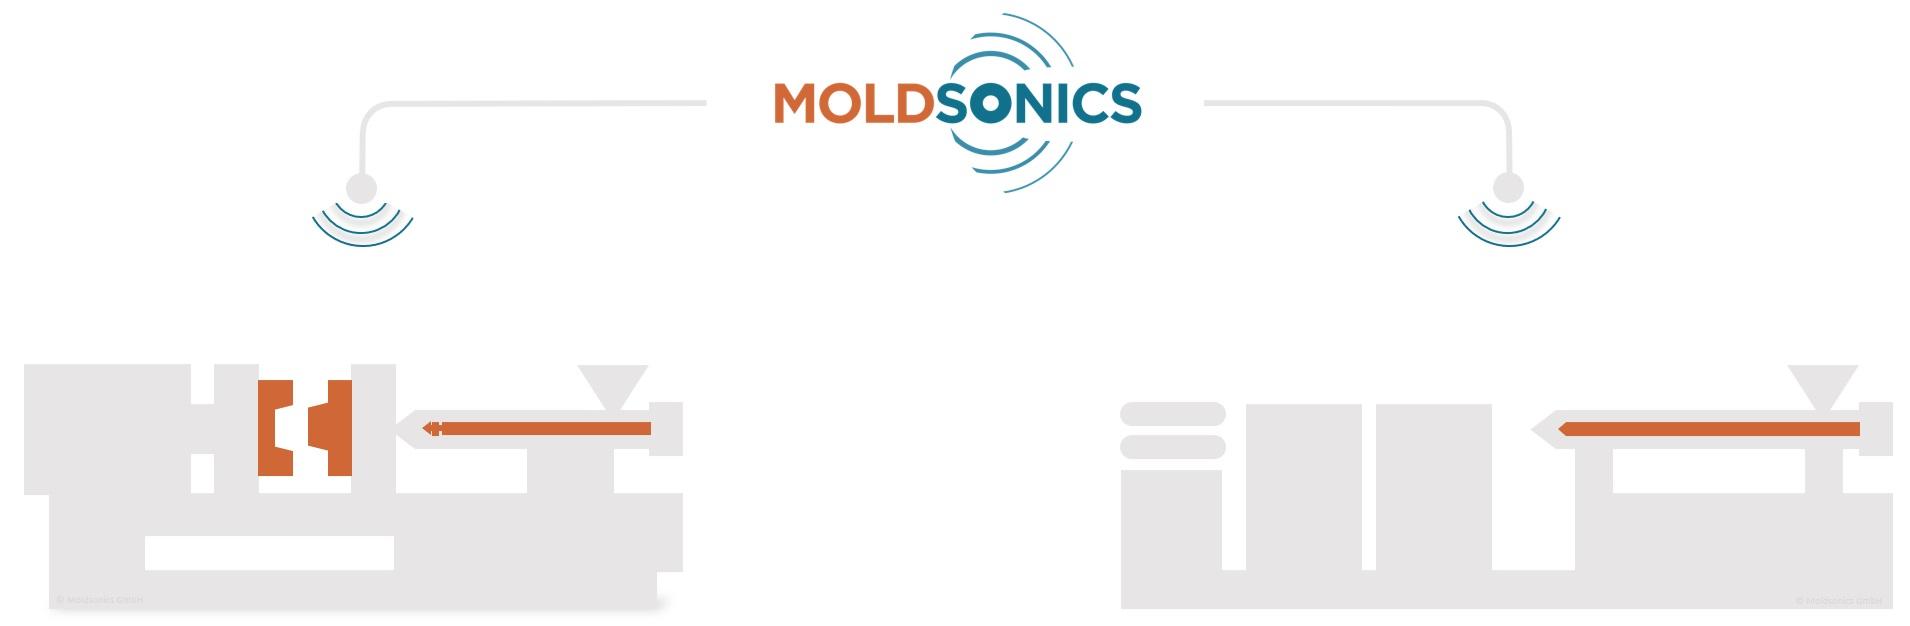 Moldsonics-overview